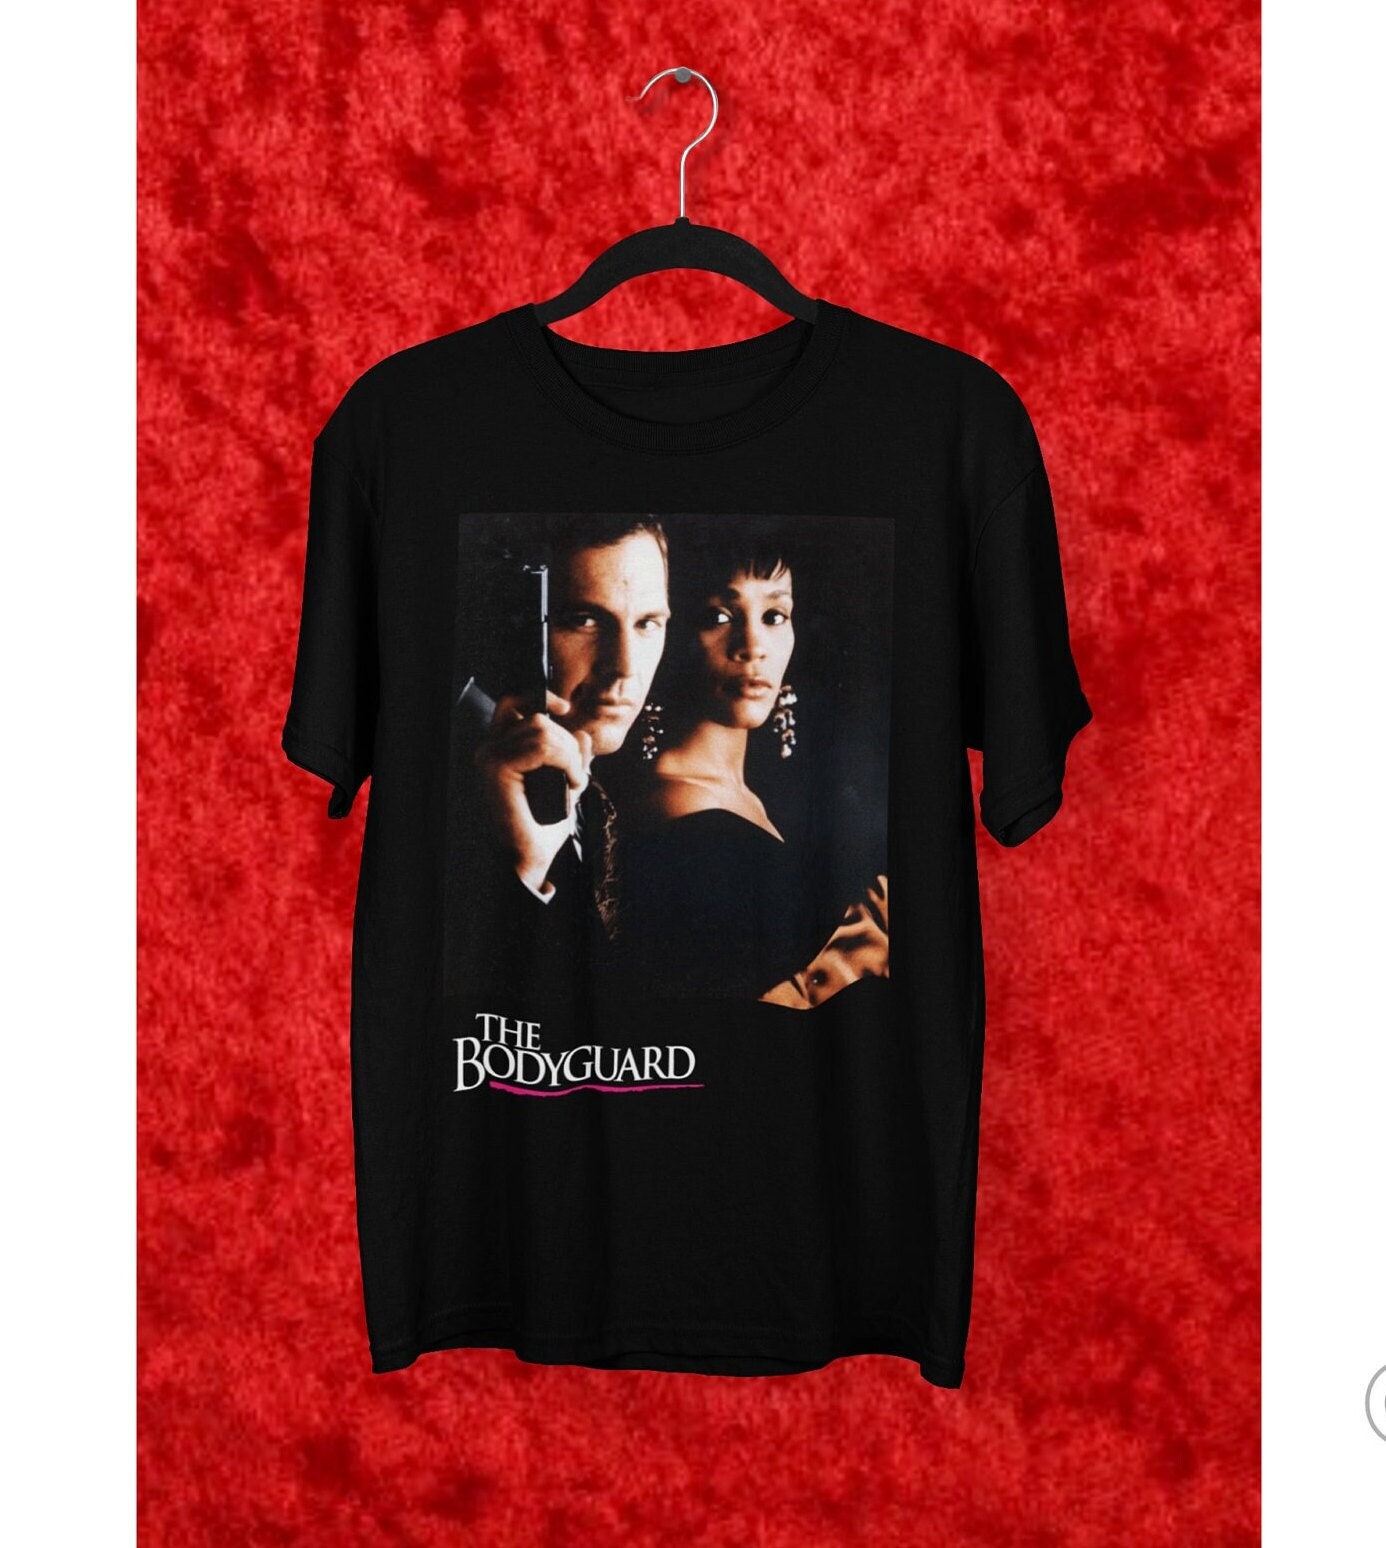 Discover The Bodyguard Whitney Houston 90s Aesthetic Movie Retro Unisex Shirt / Vintage Style